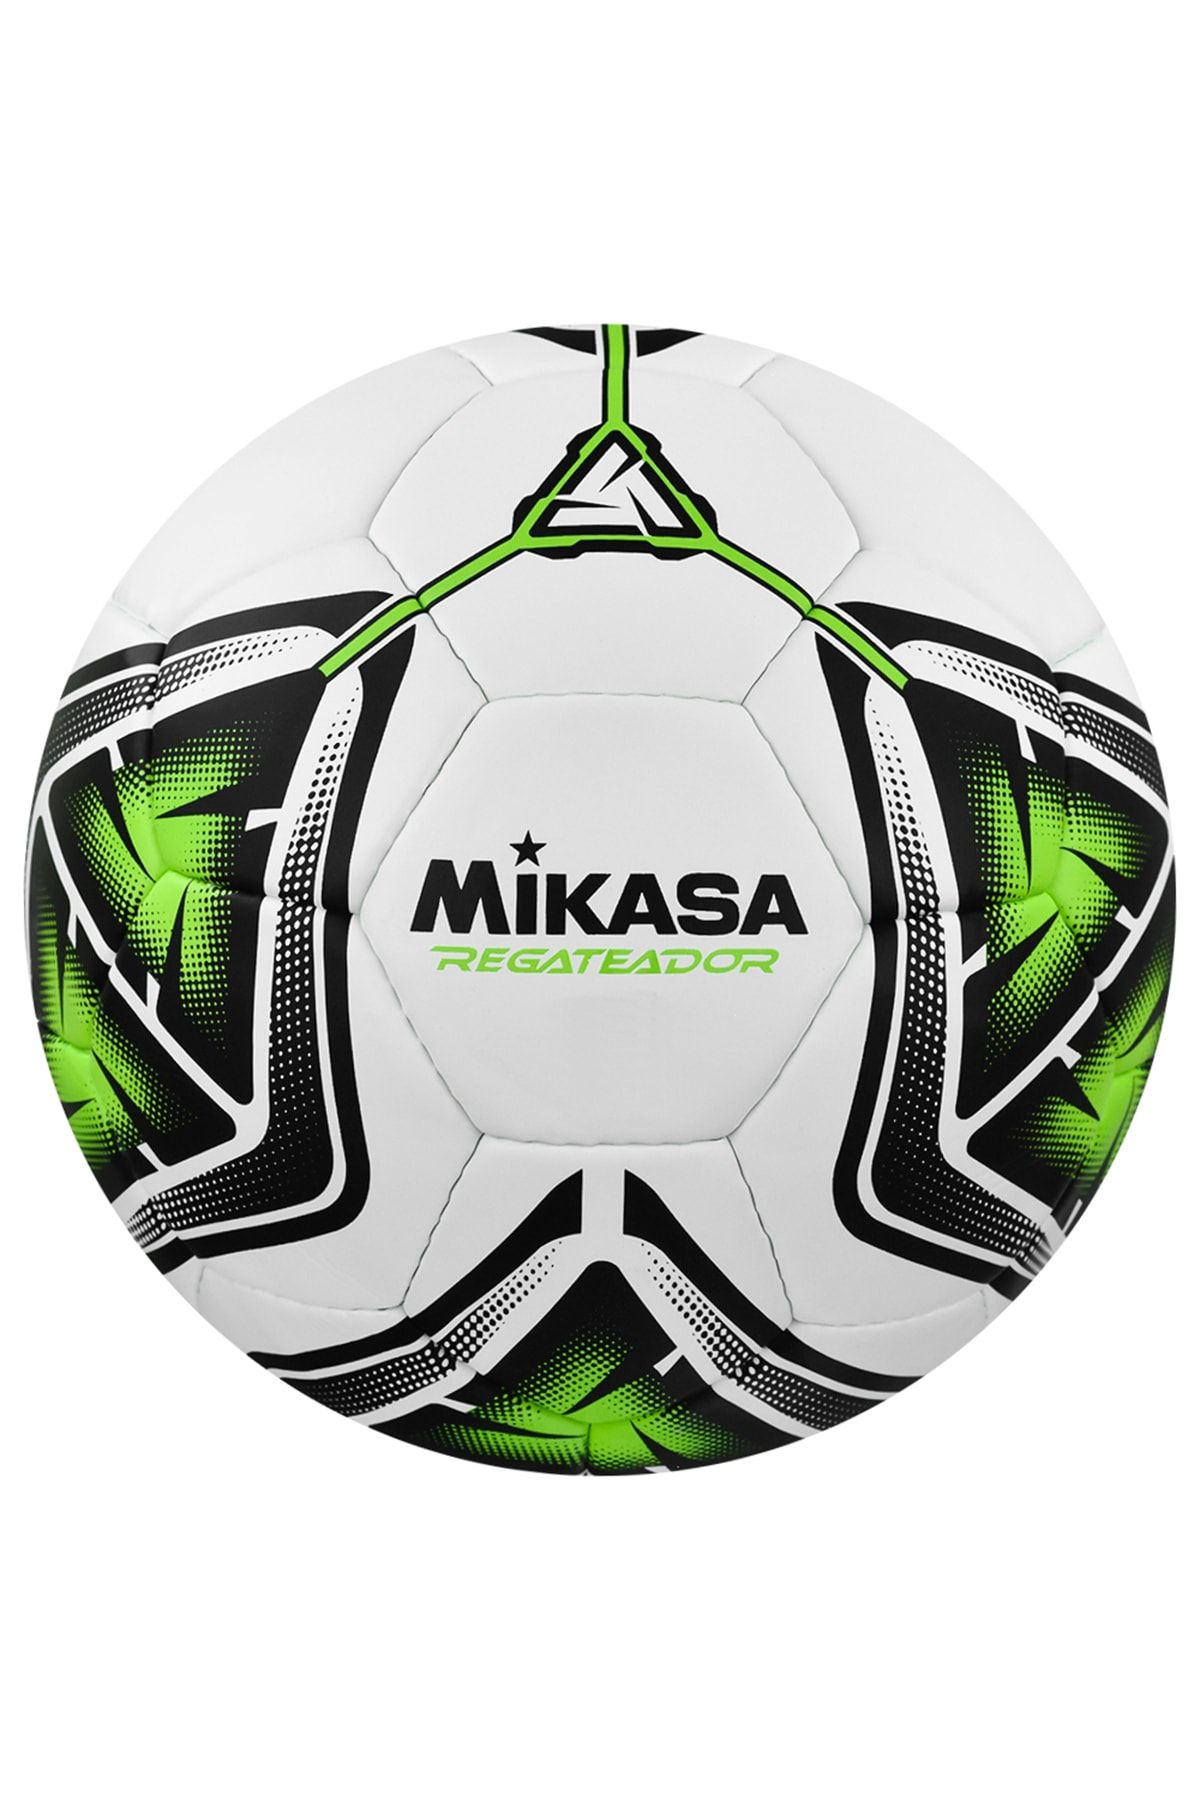 MIKASA Regateador Dikişli 4 No Beyaz Yeşil Futbol Topu